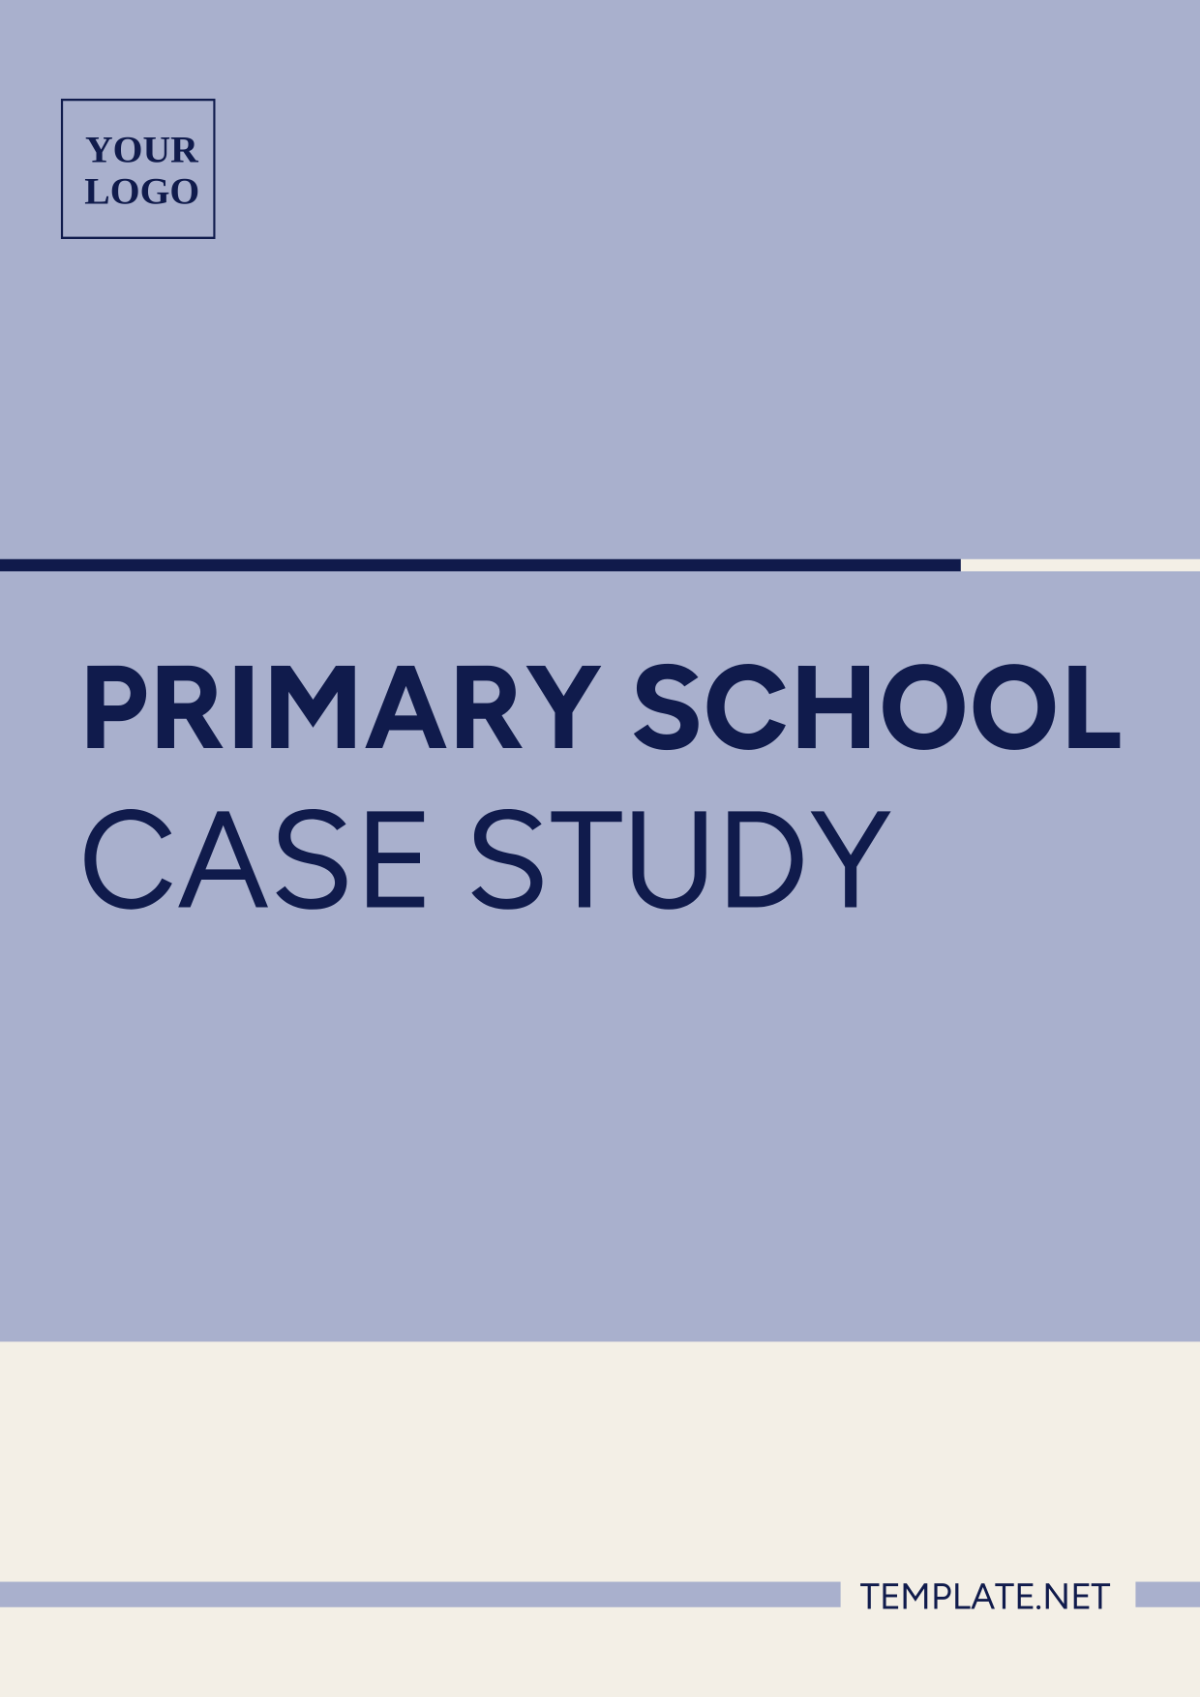 Primary School Case Study Template